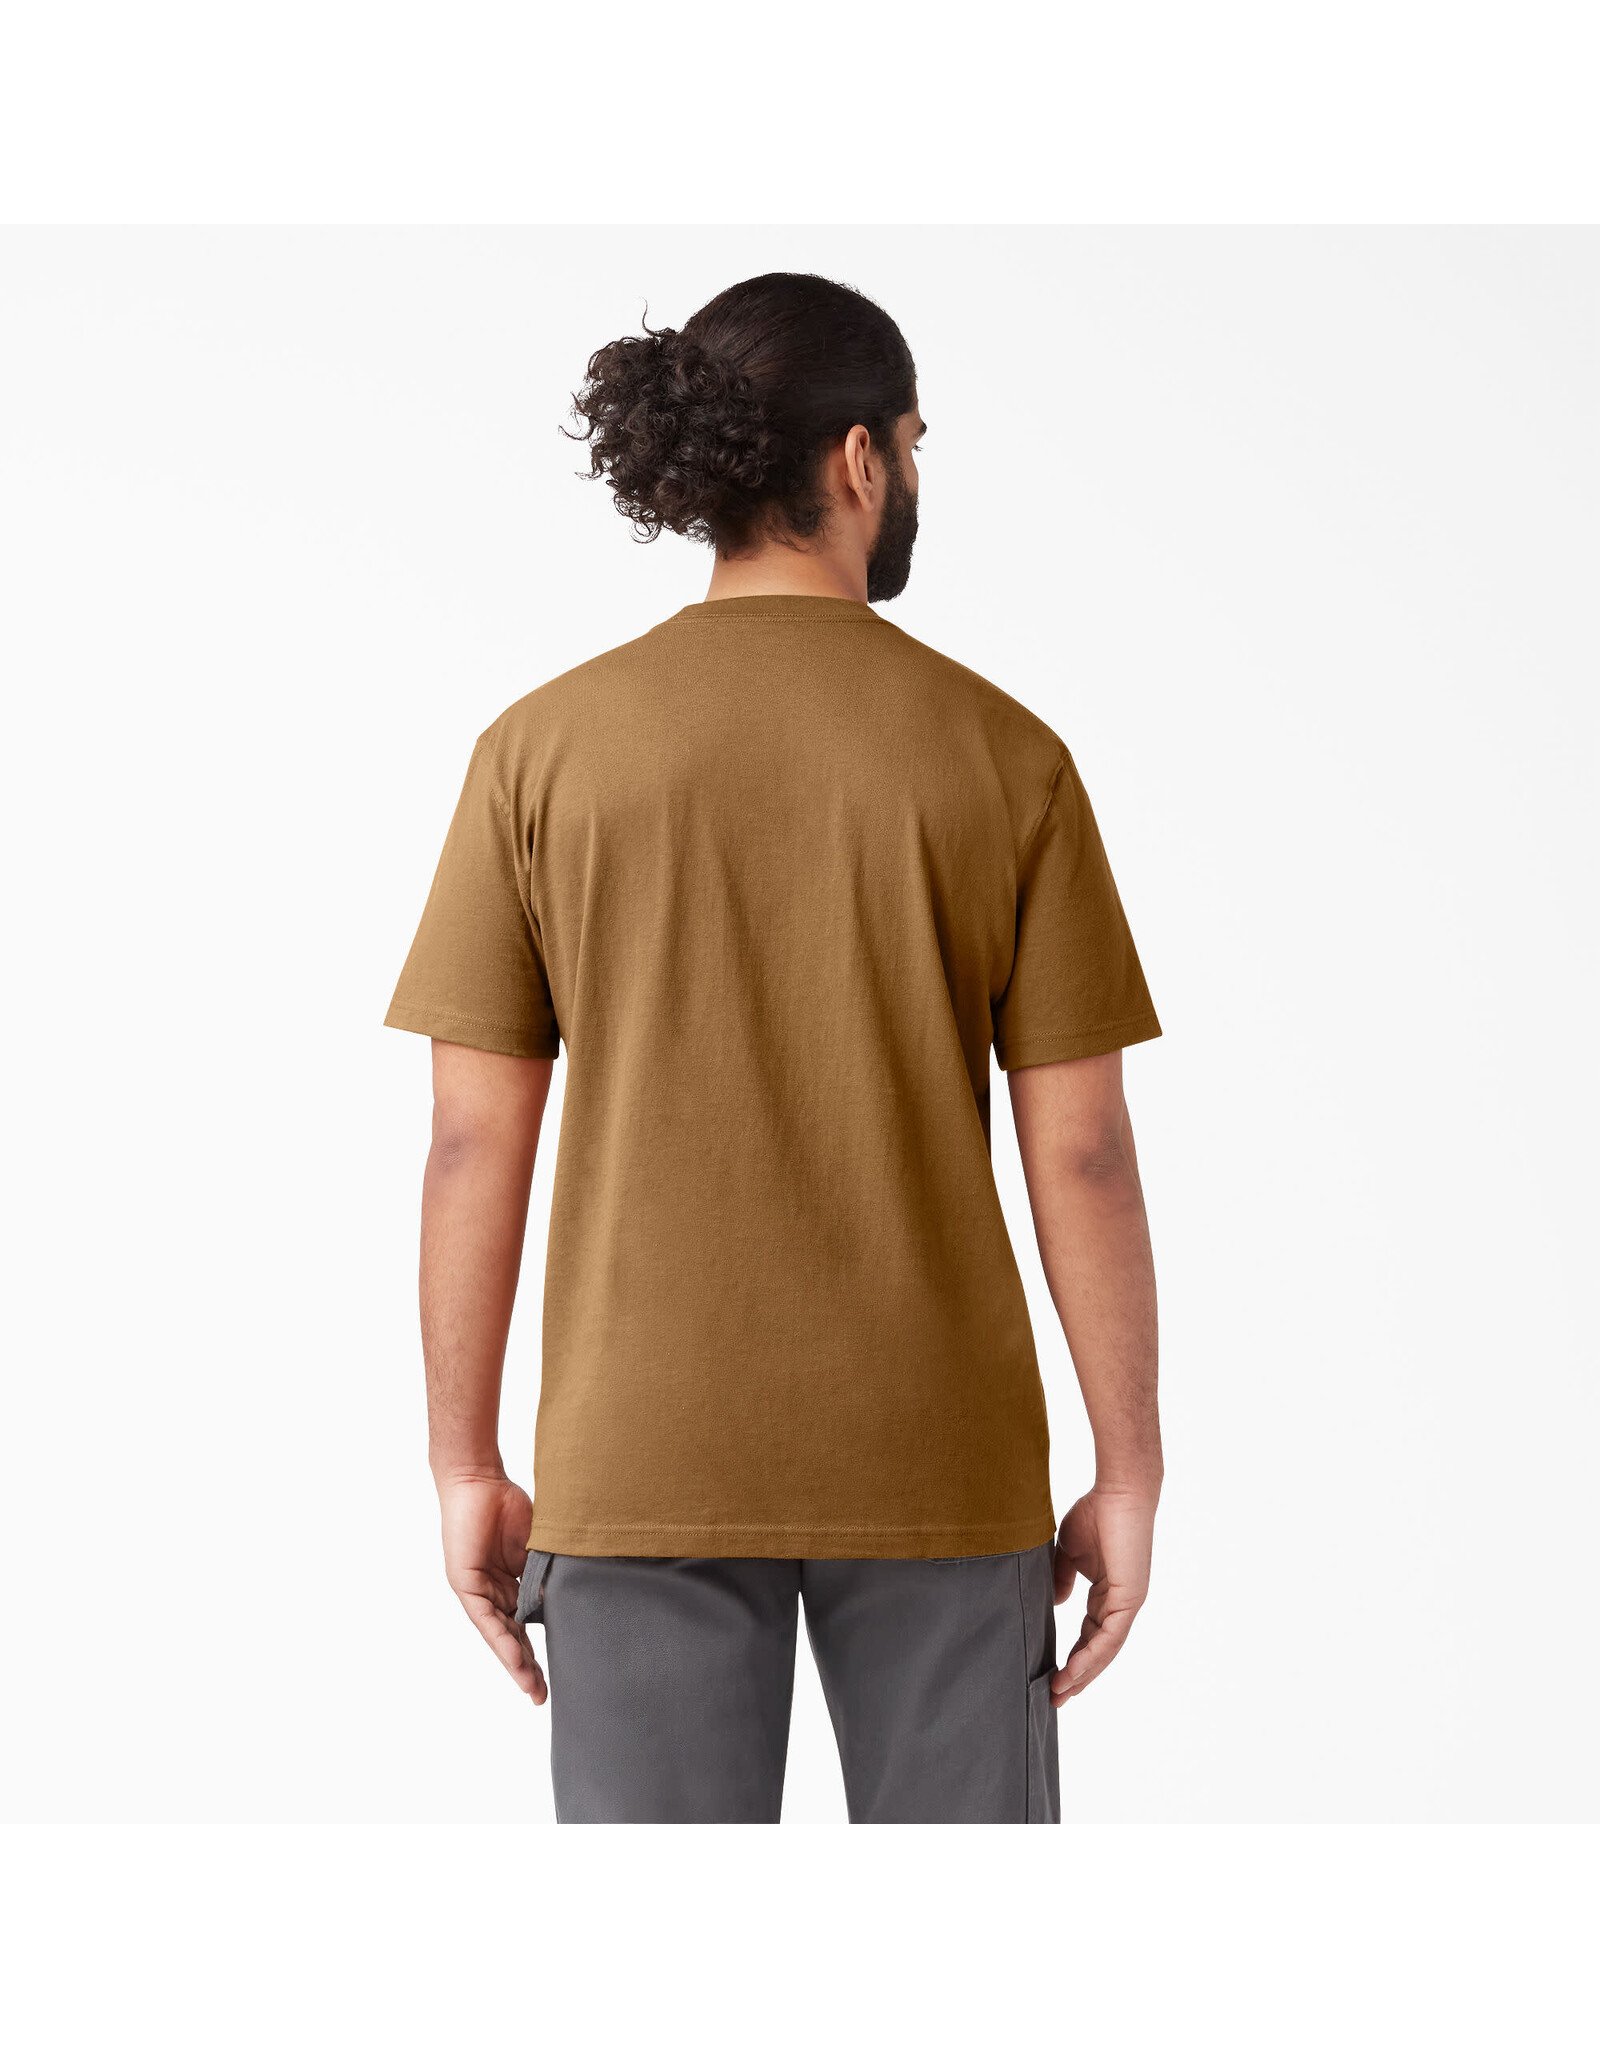 DICKIES Heavyweight Short Sleeve Pocket T-Shirt Brown Duck - WS450BD